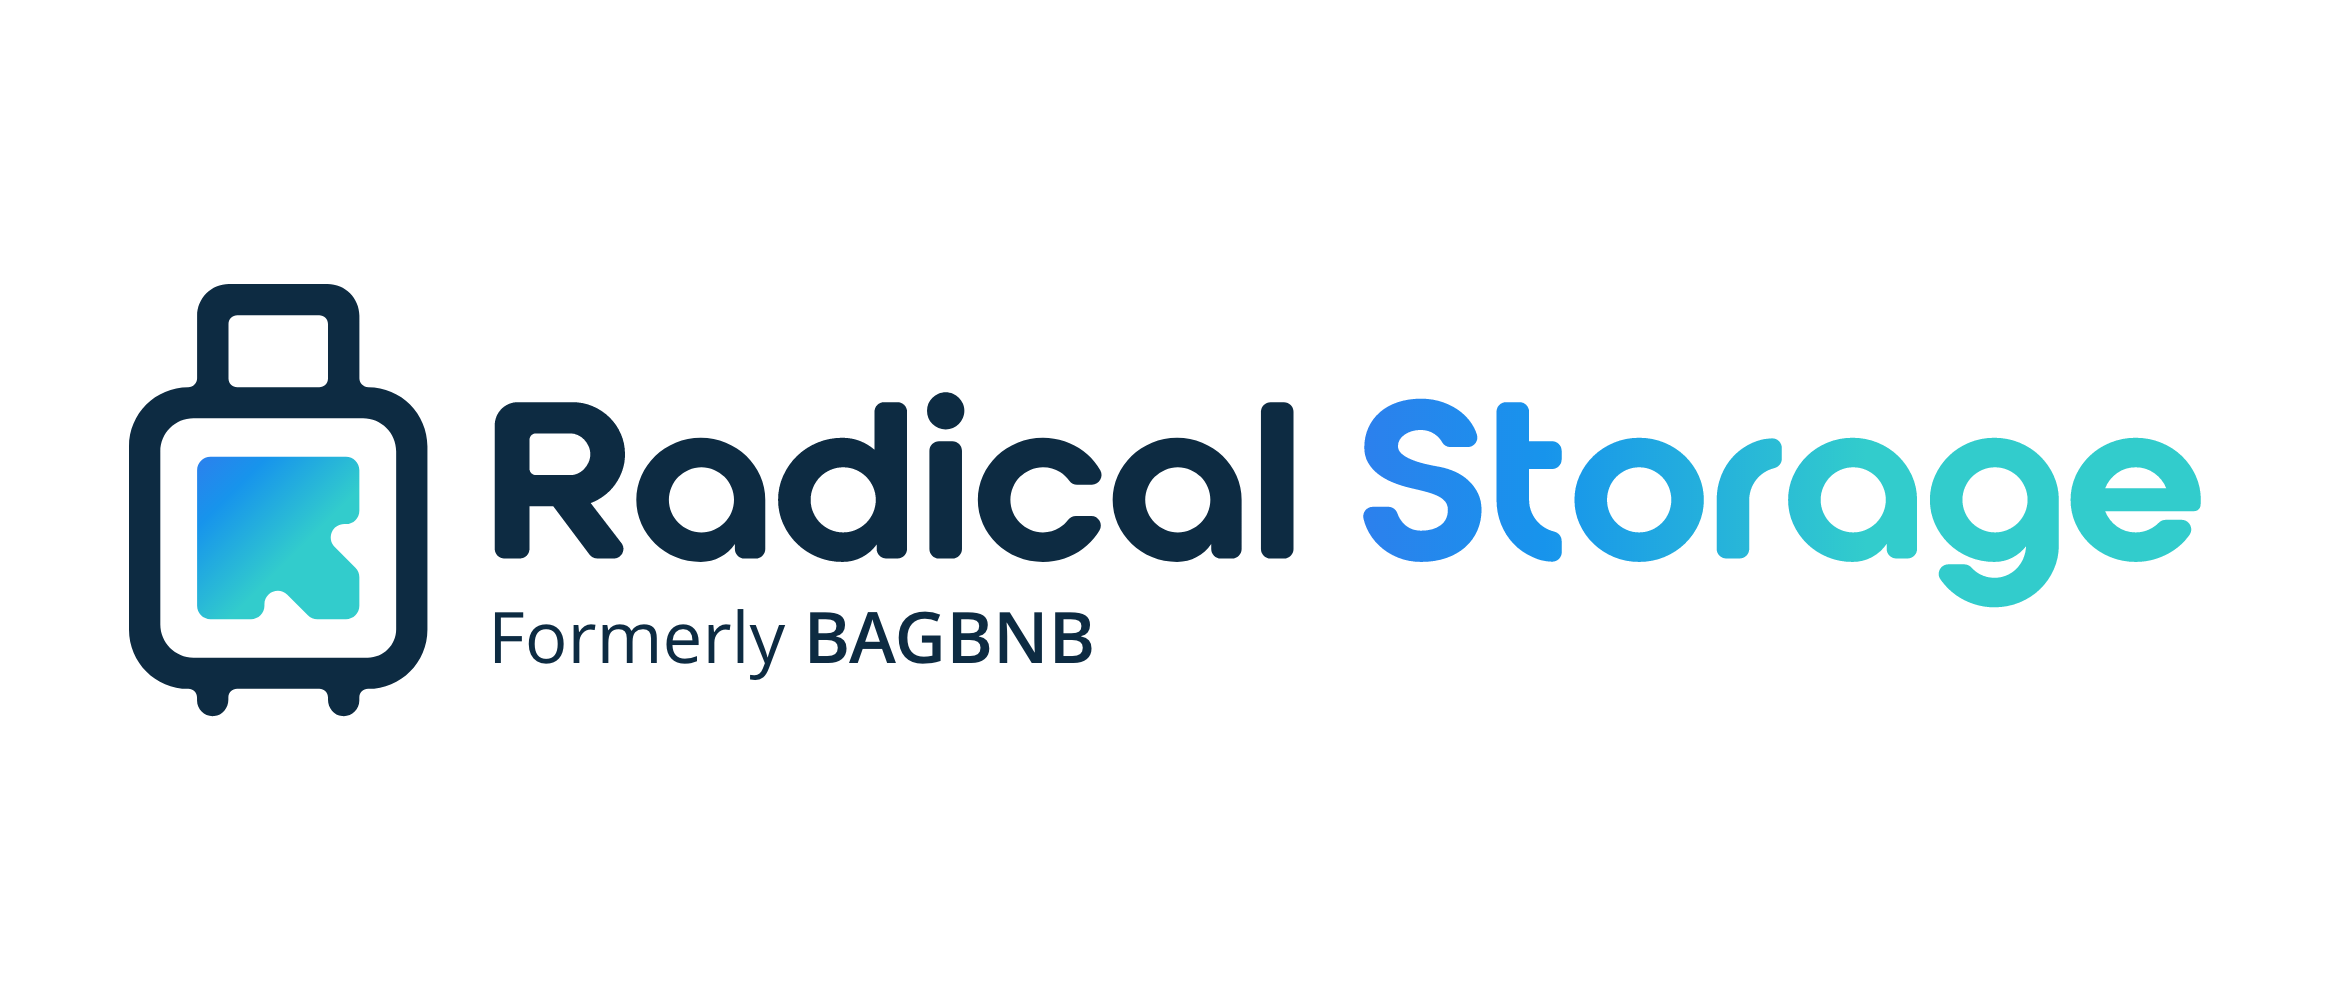 radical storage